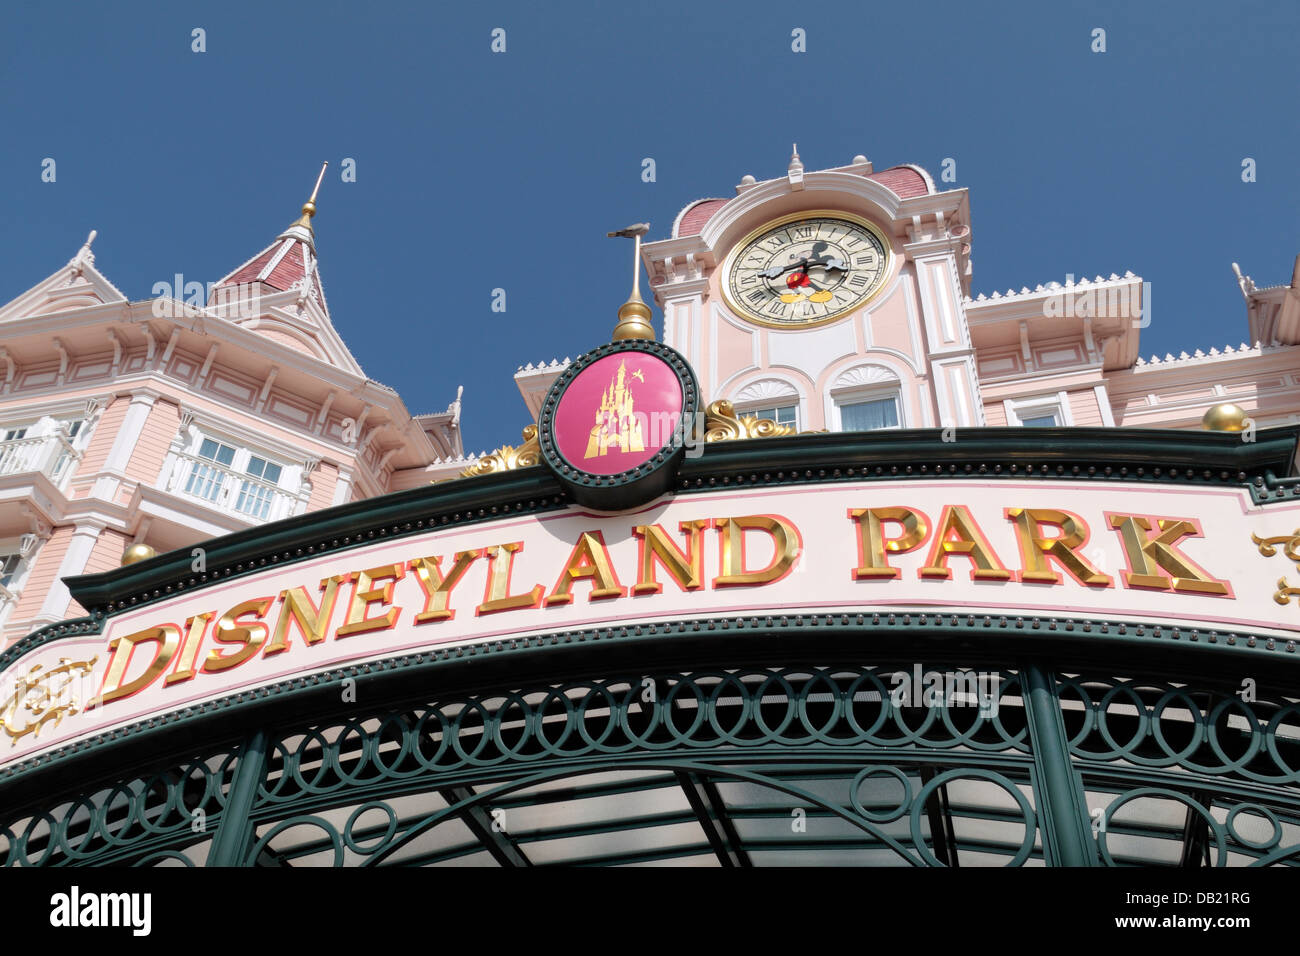 Sign above entrance to Disneyland Park, Disneyland Paris, Marne-la-Vallée, near Paris, France. Stock Photo